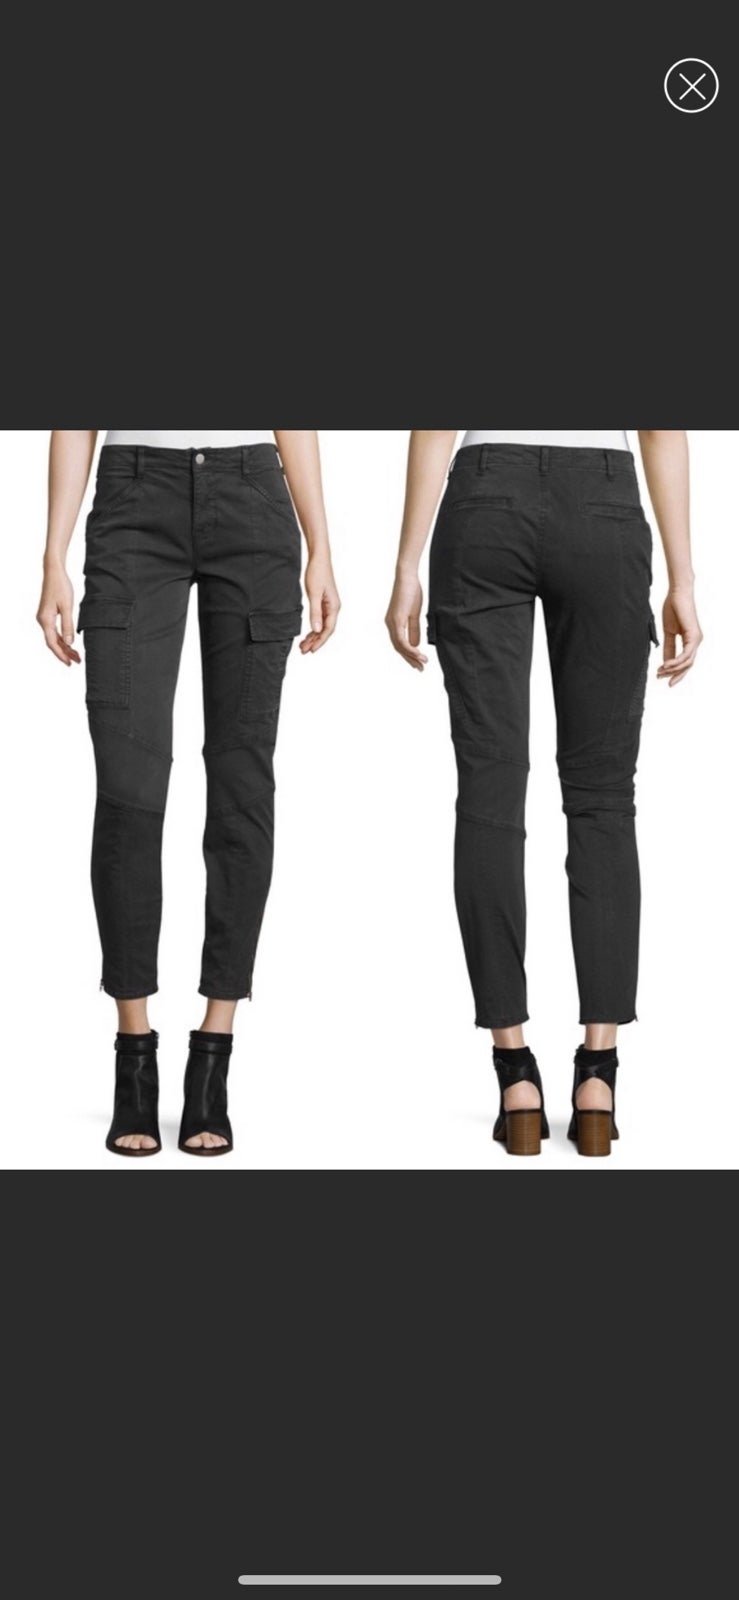 Comfortable J. Brand Houlihan Cargo Pants in Charcoal Size 26 GZdQkzj6L Store Online